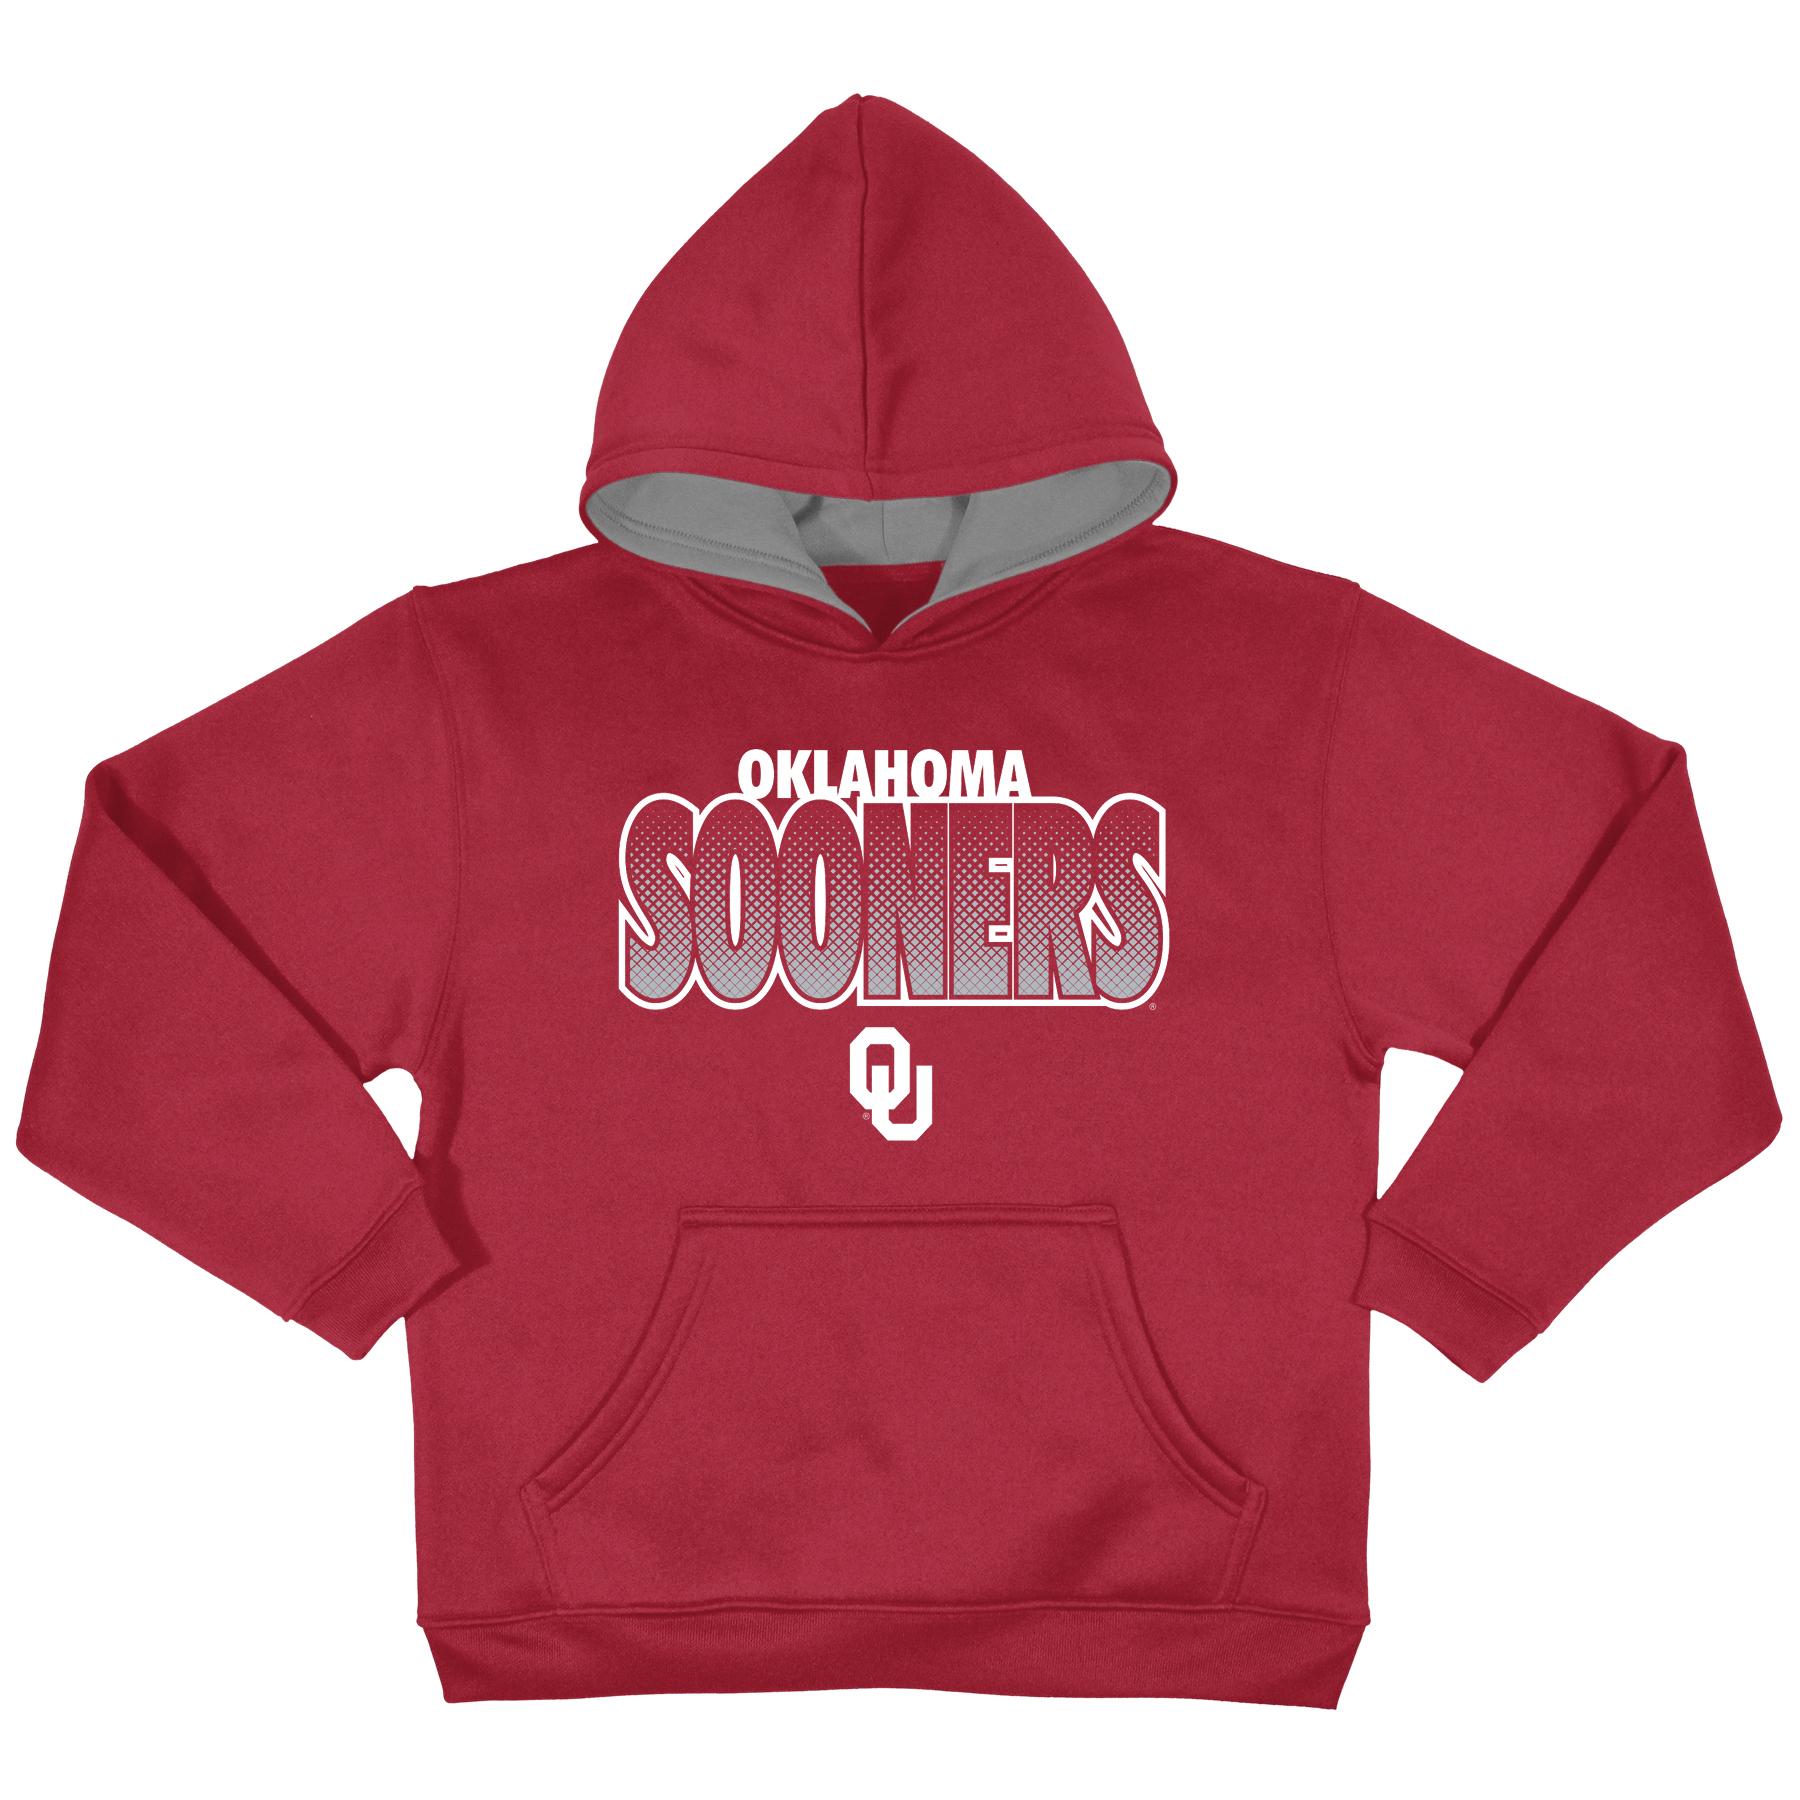 NCAA Boys' Hooded Sweatshirt - University of Oklahoma Sooners